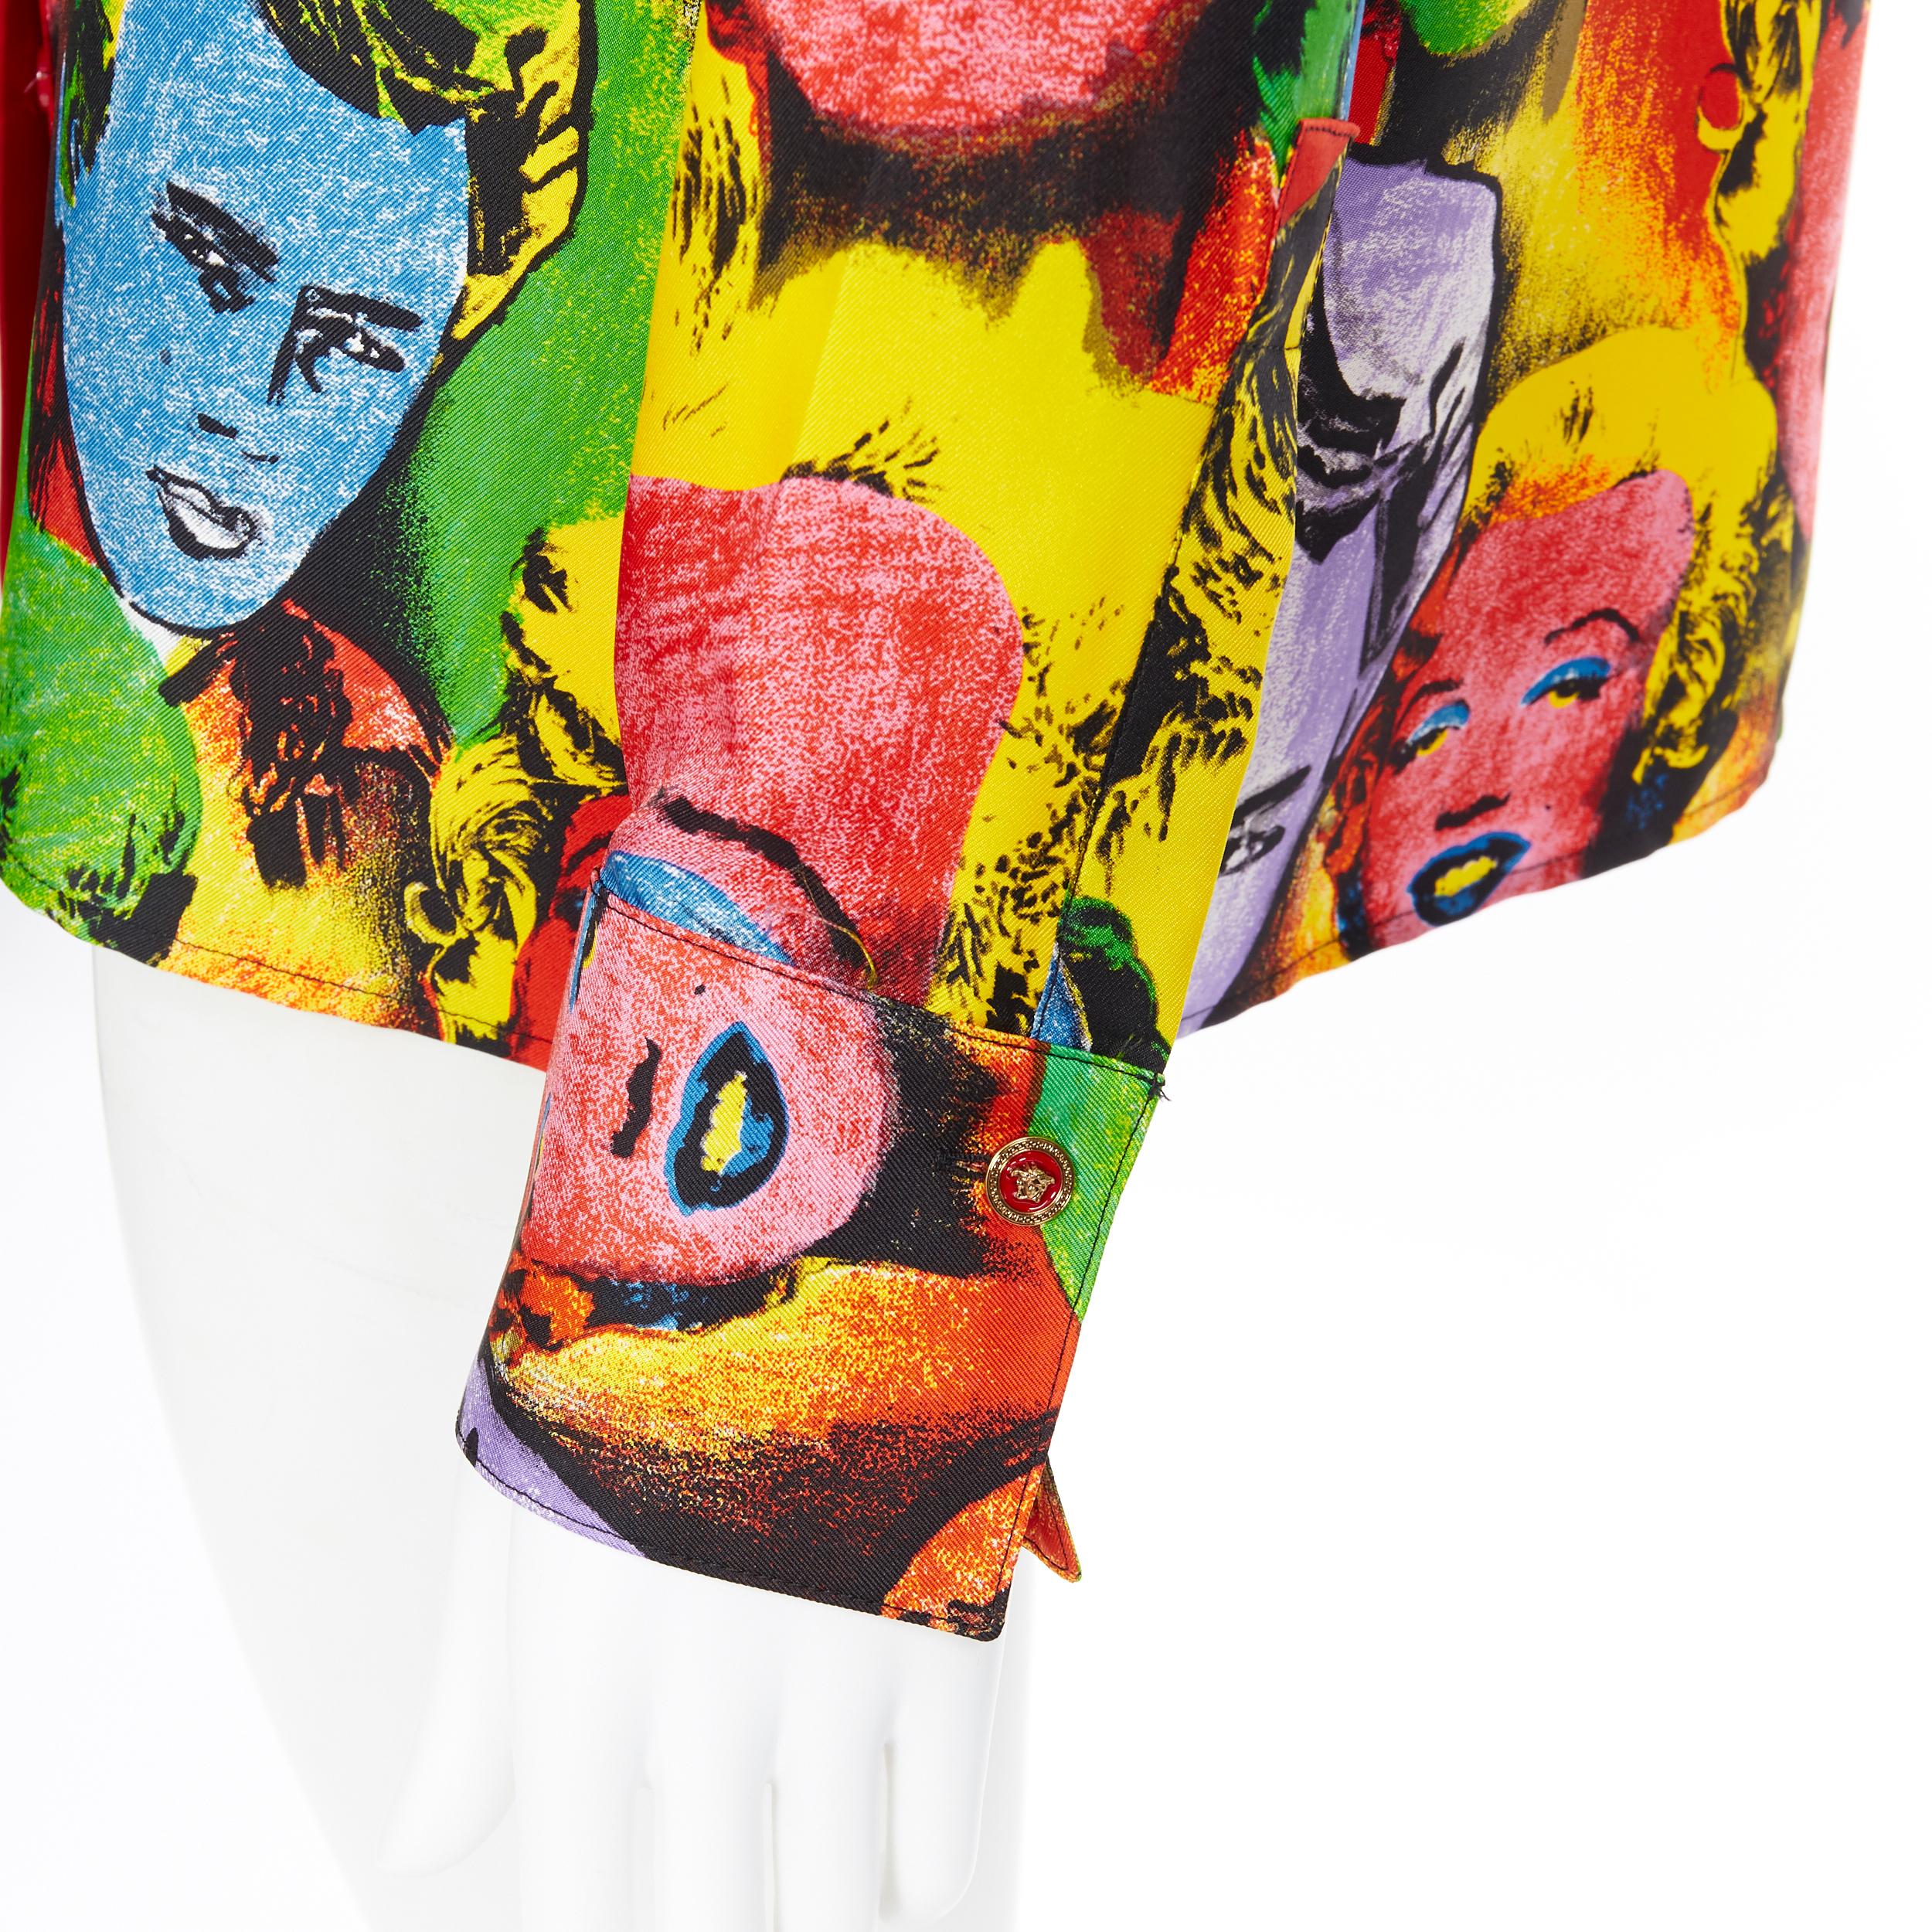 new VERSACE Runway Tribute pop art Marilyn Monroe James Dean silk shirt IT42 M 4